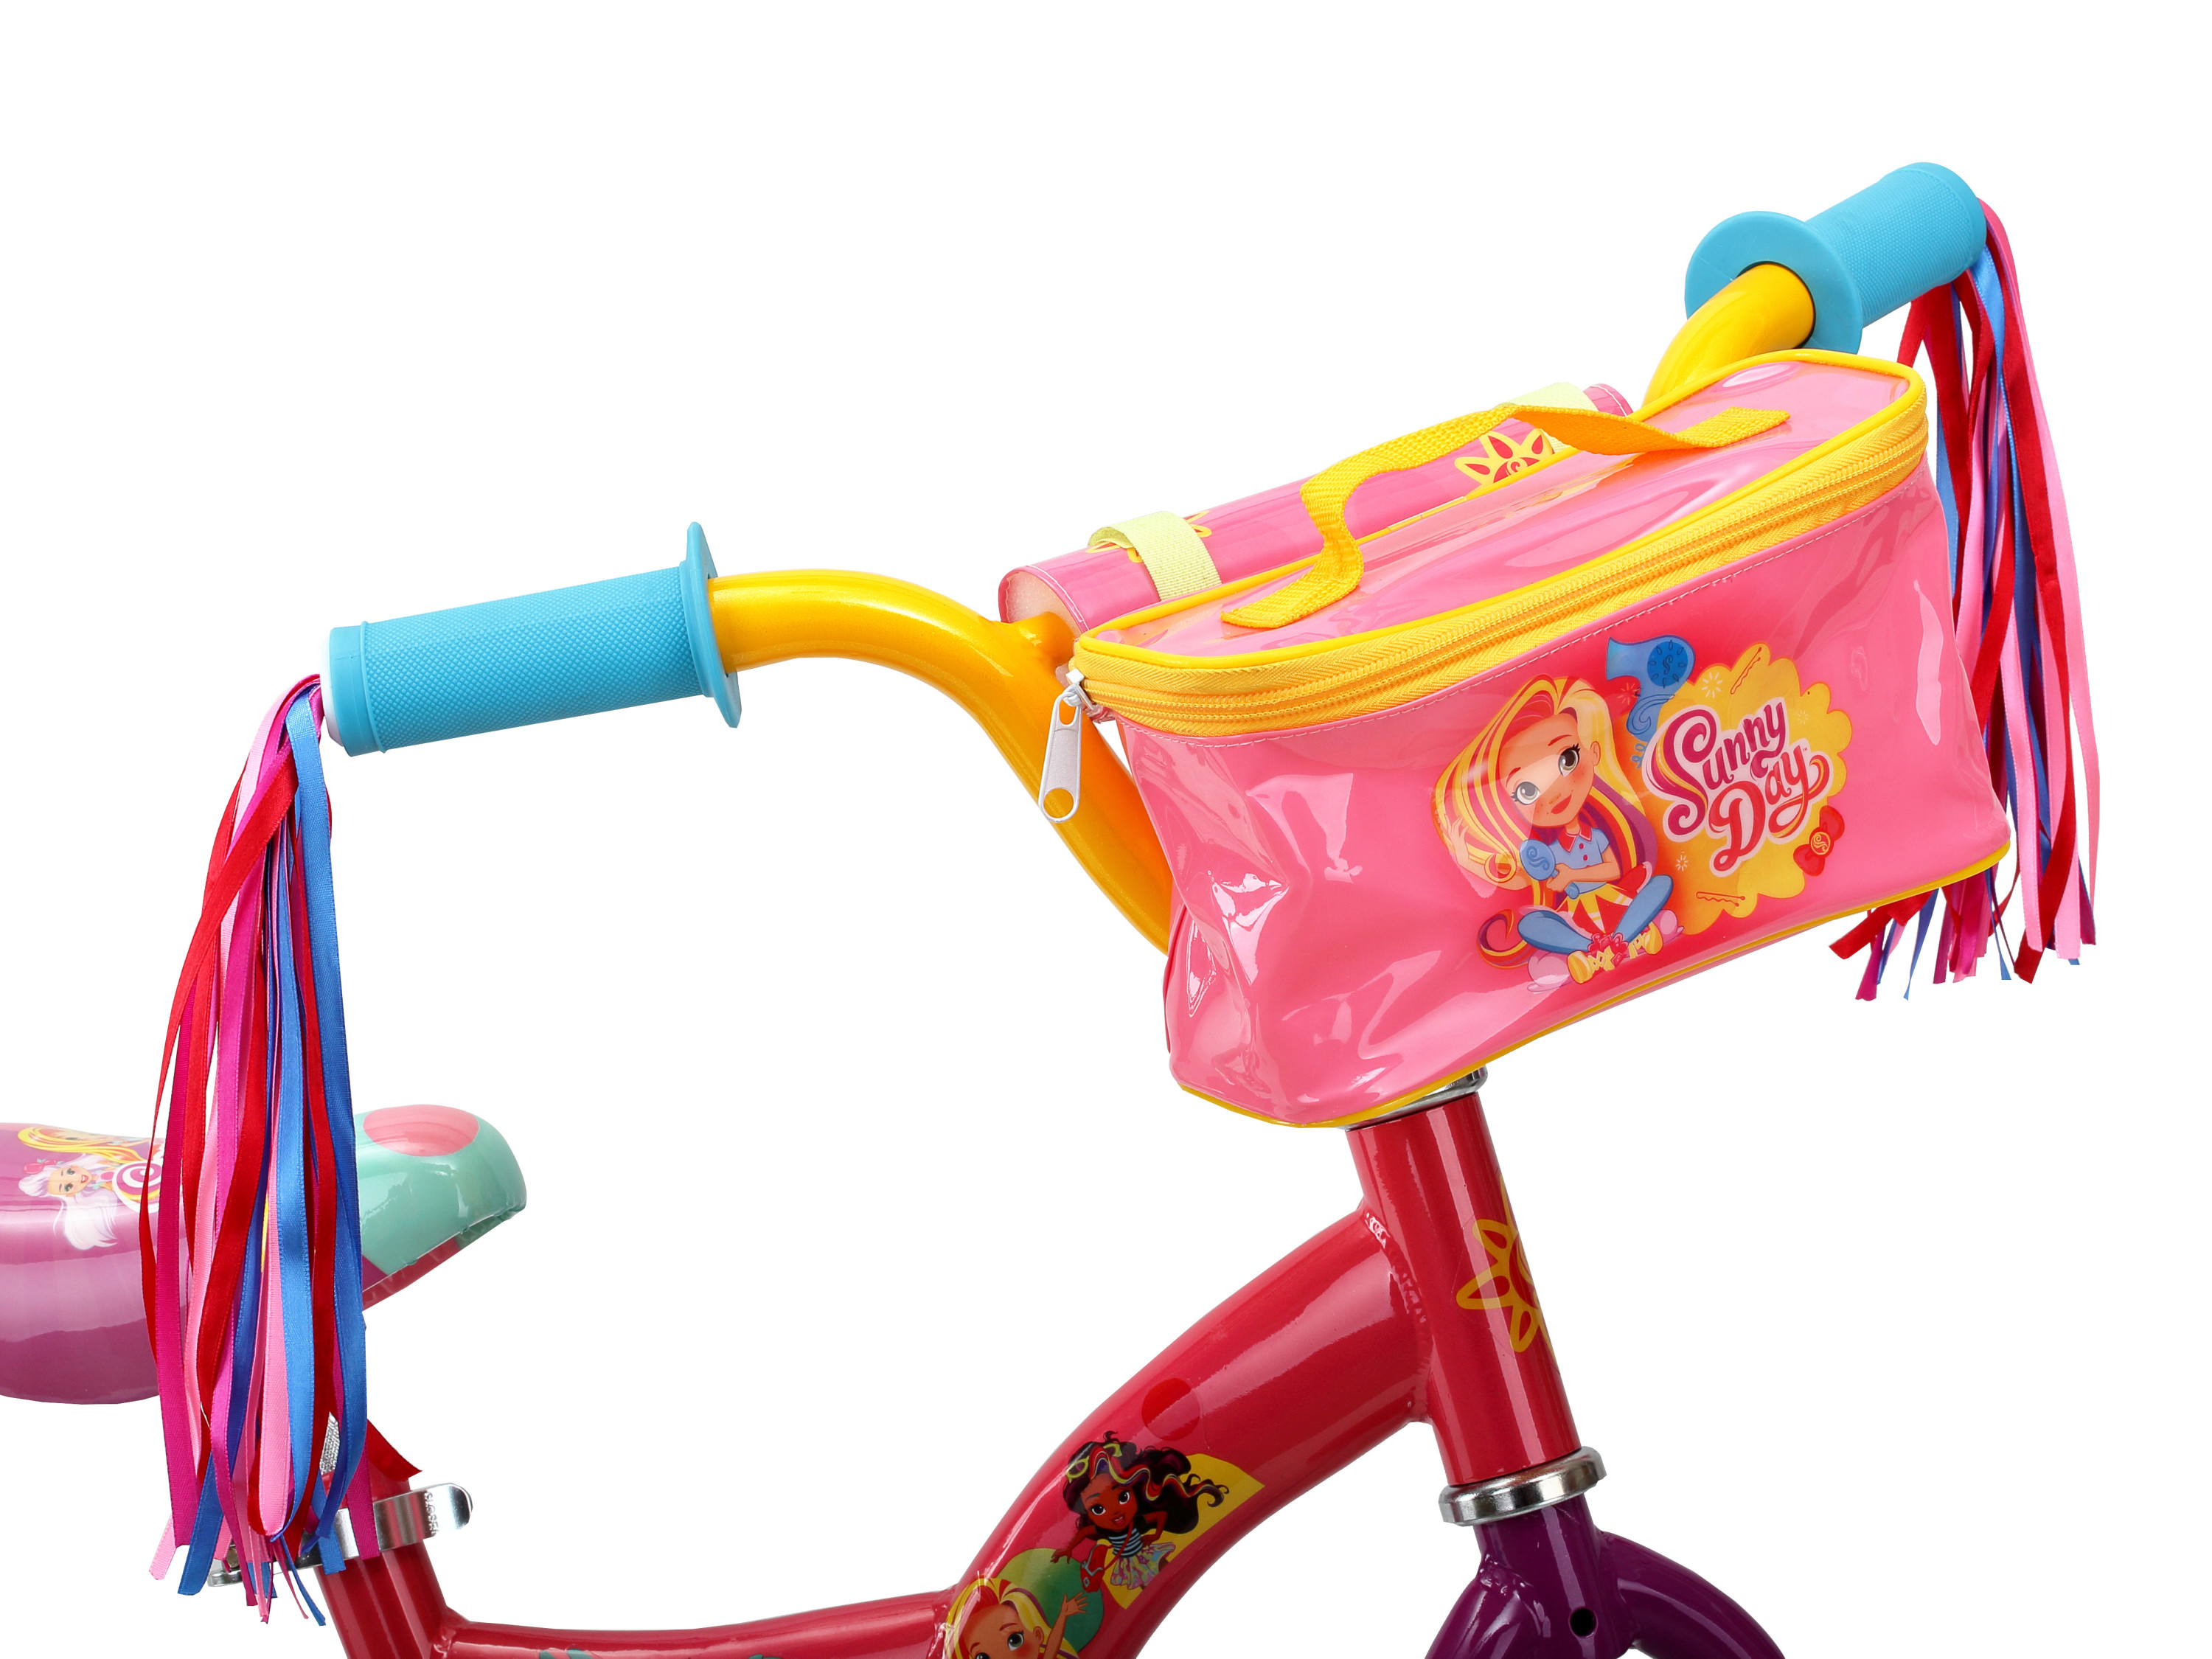 Nickelodeon Sunny Day kids bike, 12-inch wheels, training wheels, Girls, Boys, Pink - image 3 of 5